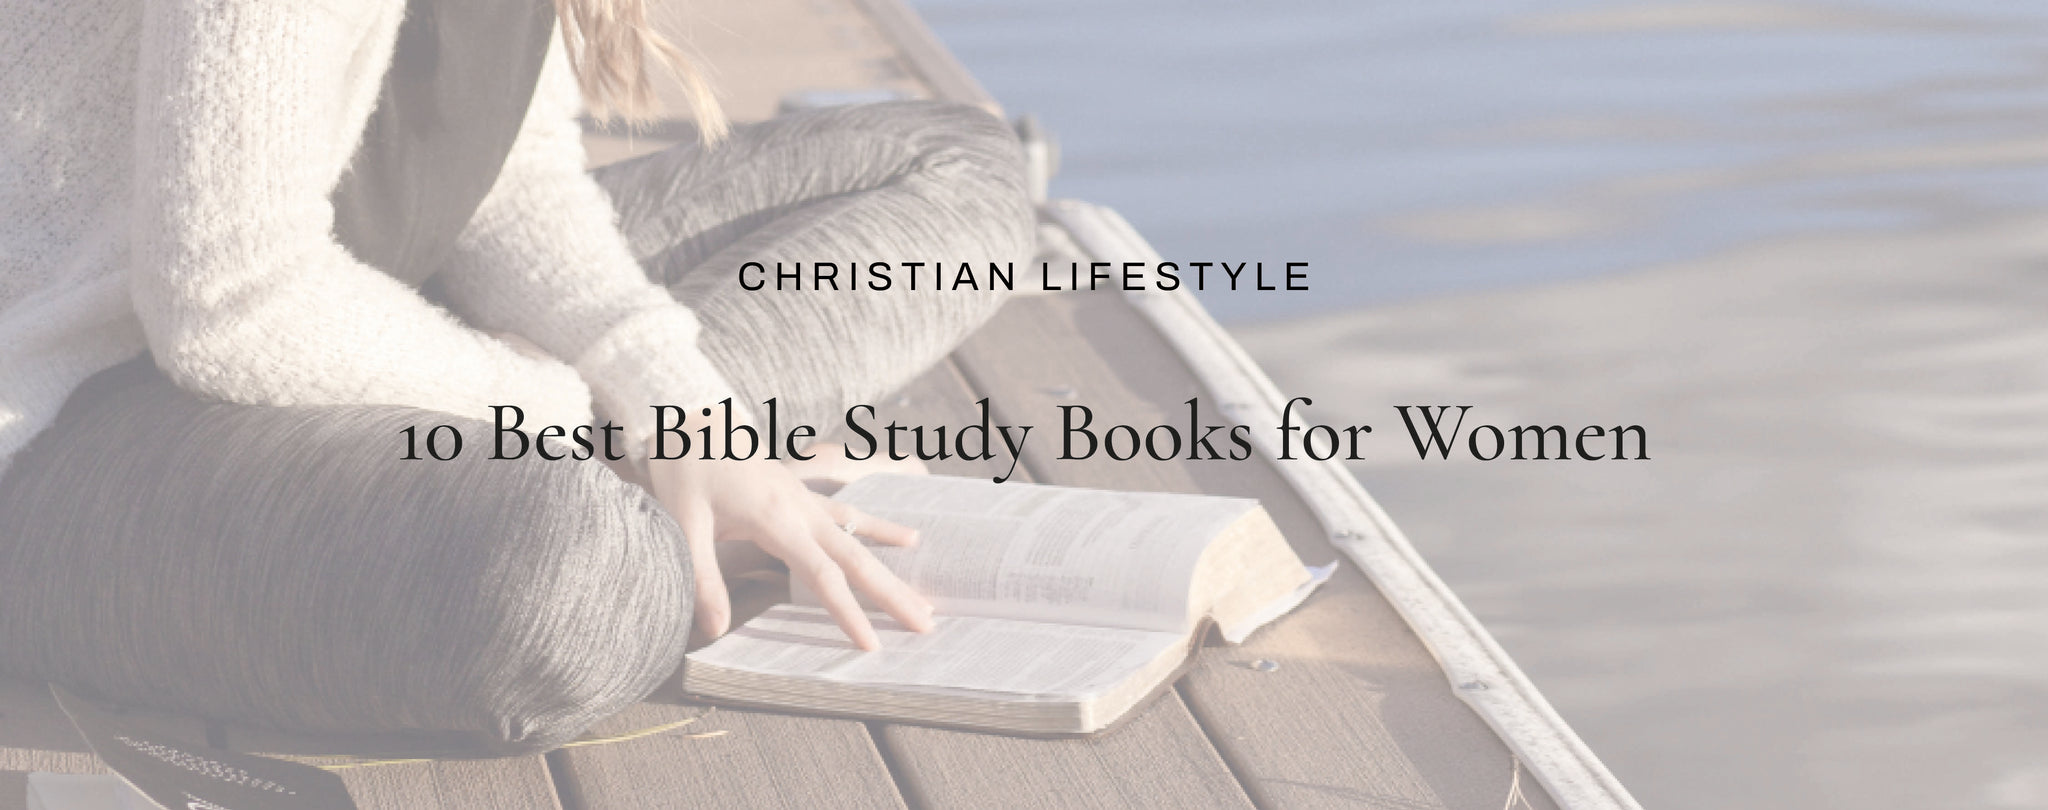 10 Best Bible Study Books for Women